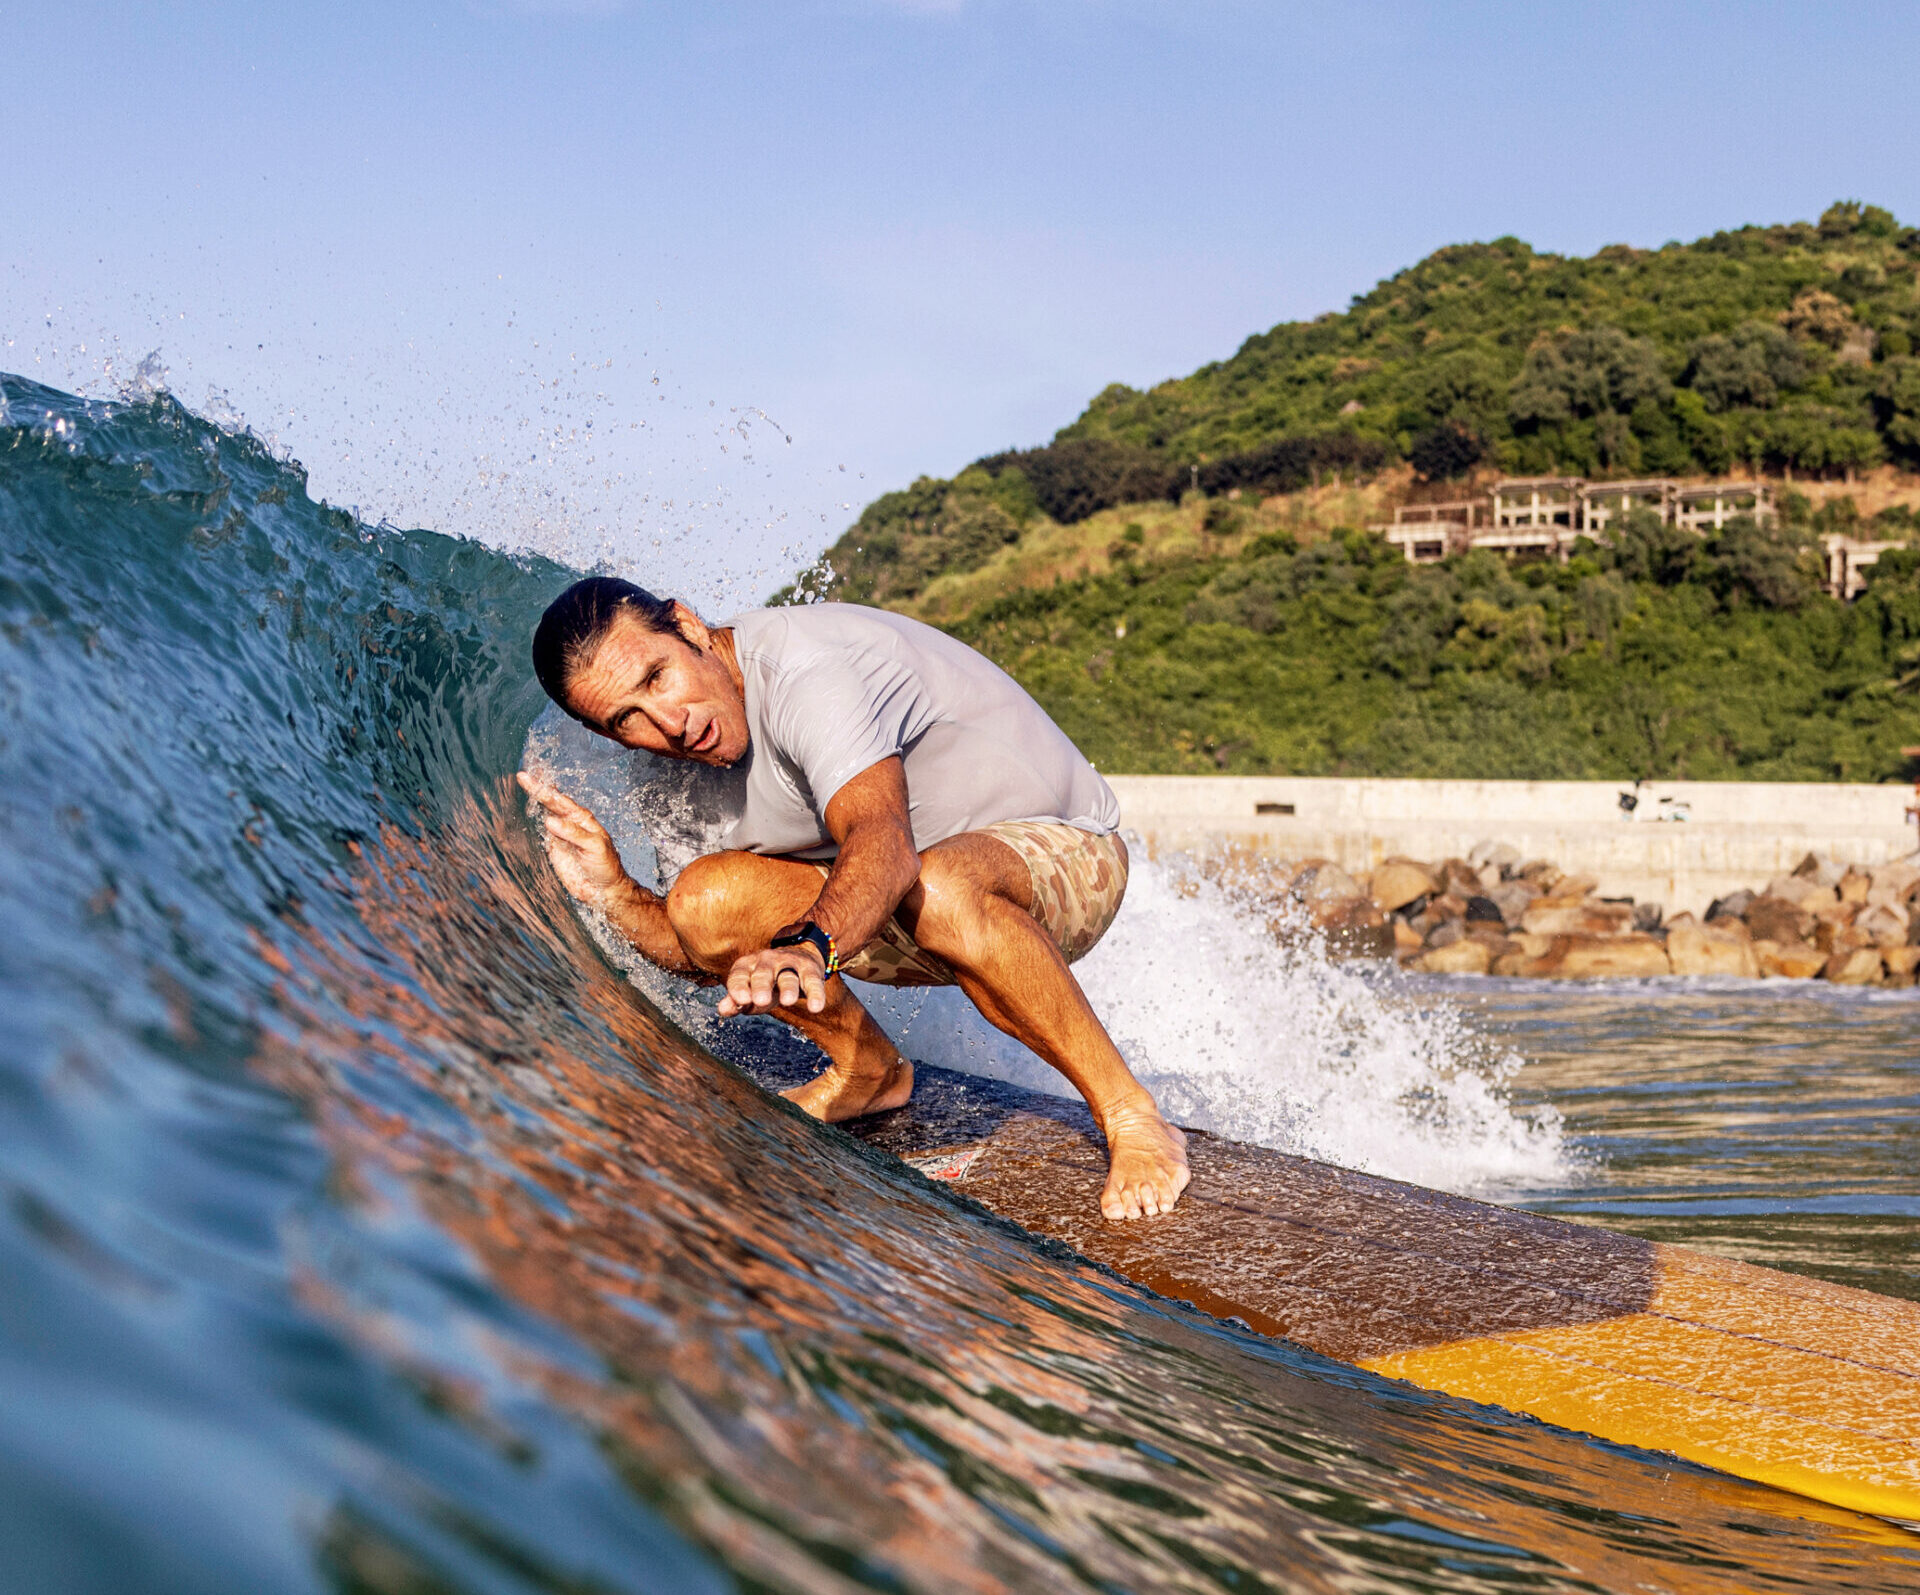 Hang Ten Surf Sign California Classic Big Wave Surfer Surfing Surfboard  Wall Art